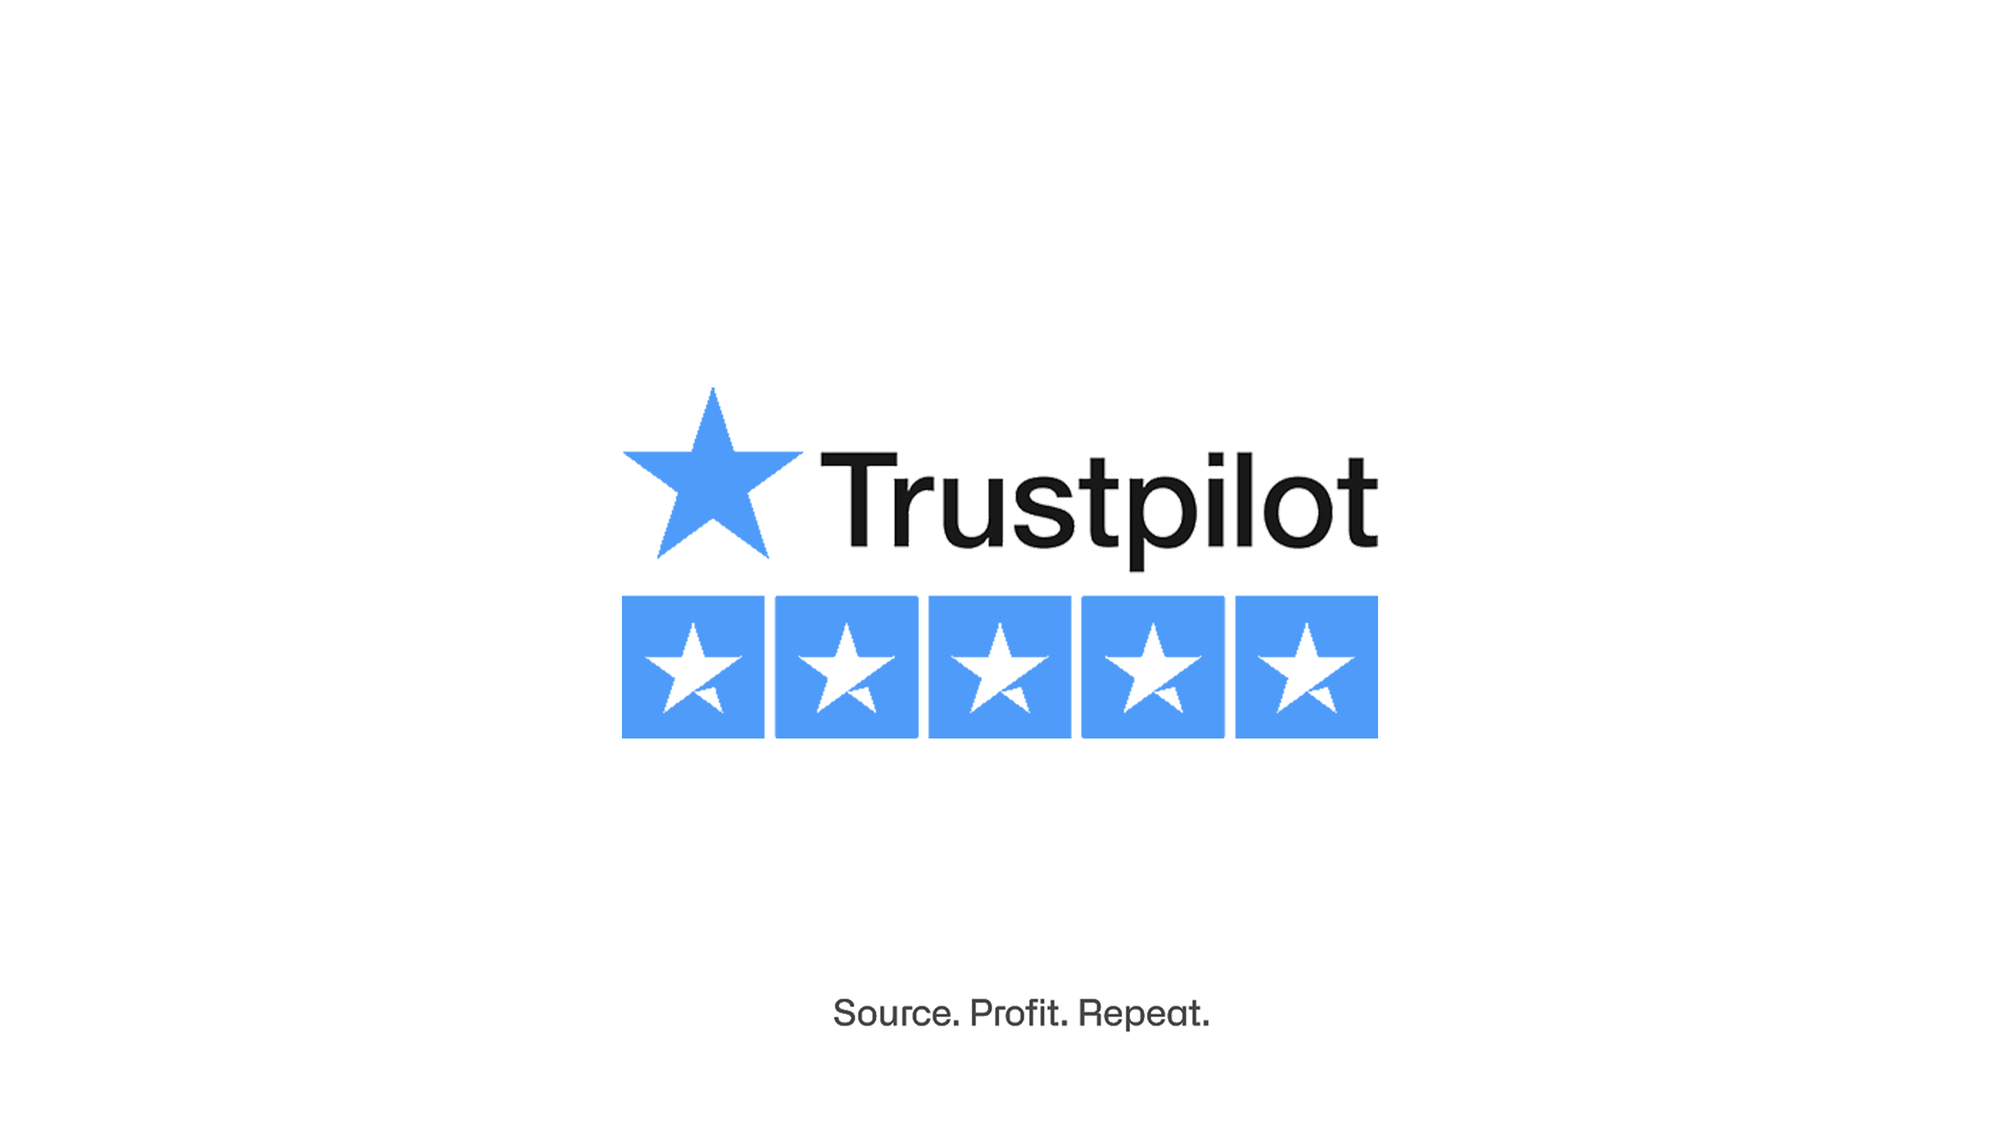 ProfitPath reviews are now on Trustpilot